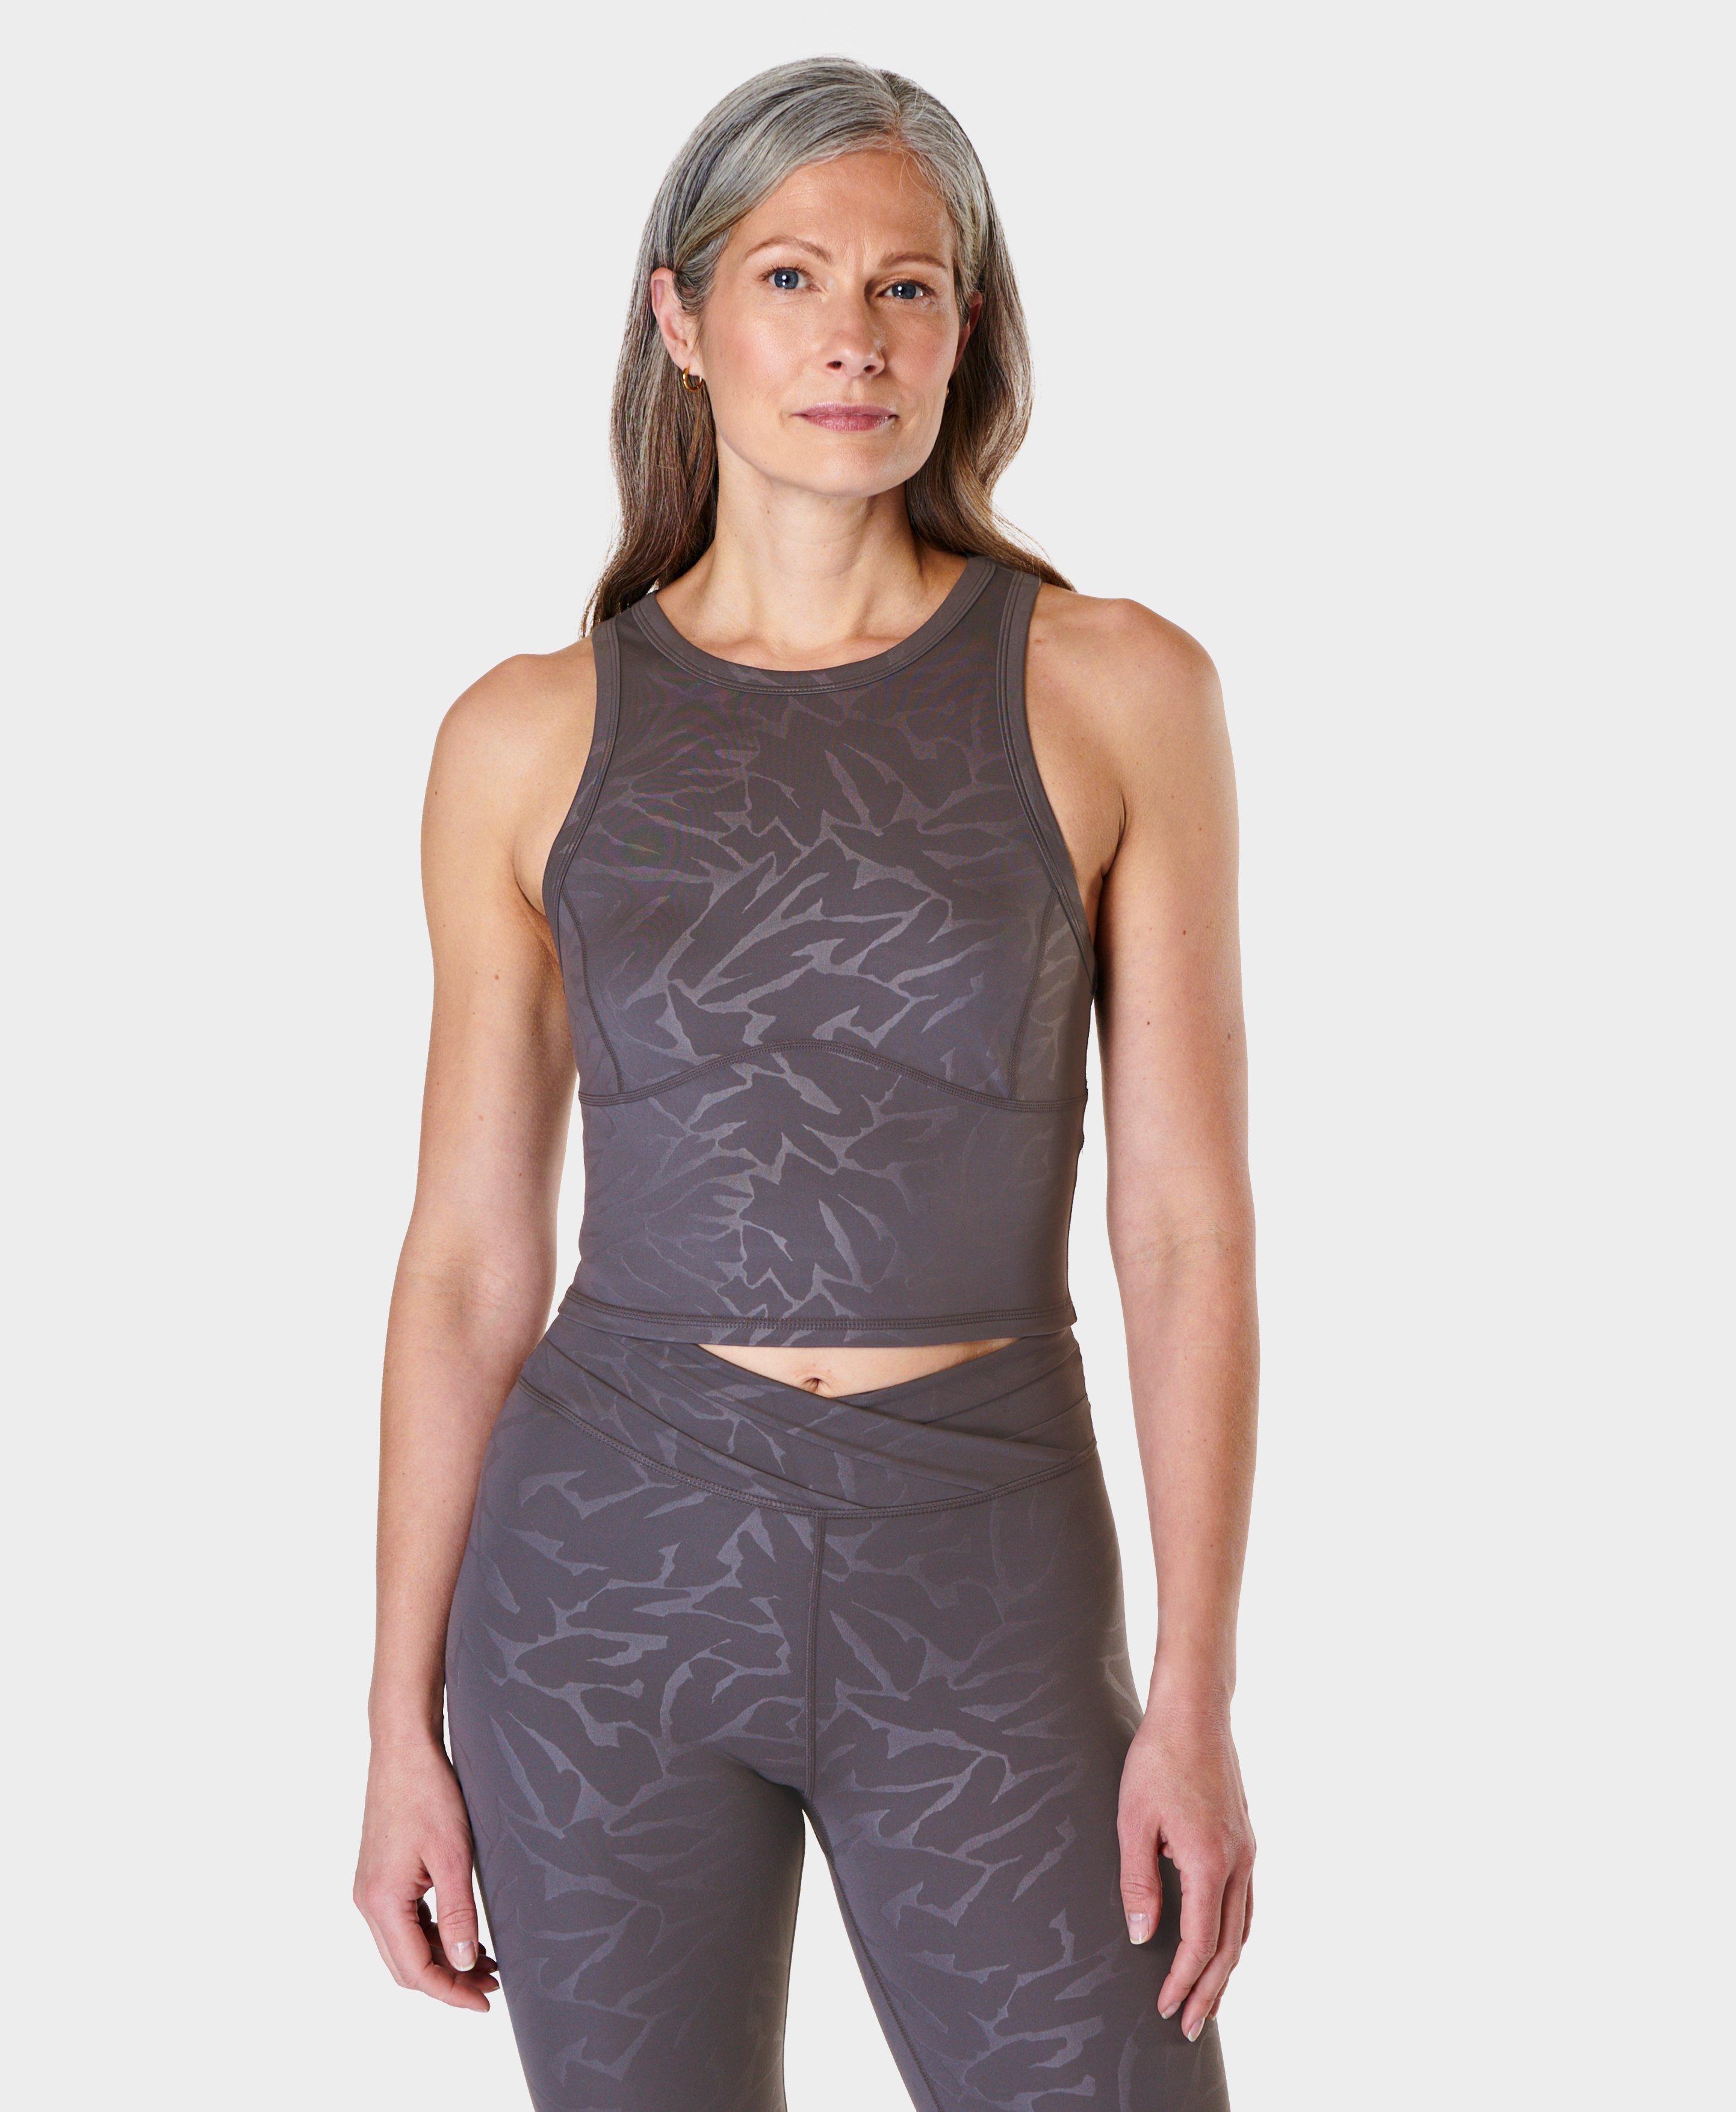 Women's Vests  Tank Tops, Graphic Vests & Racerback Vests – P&Co